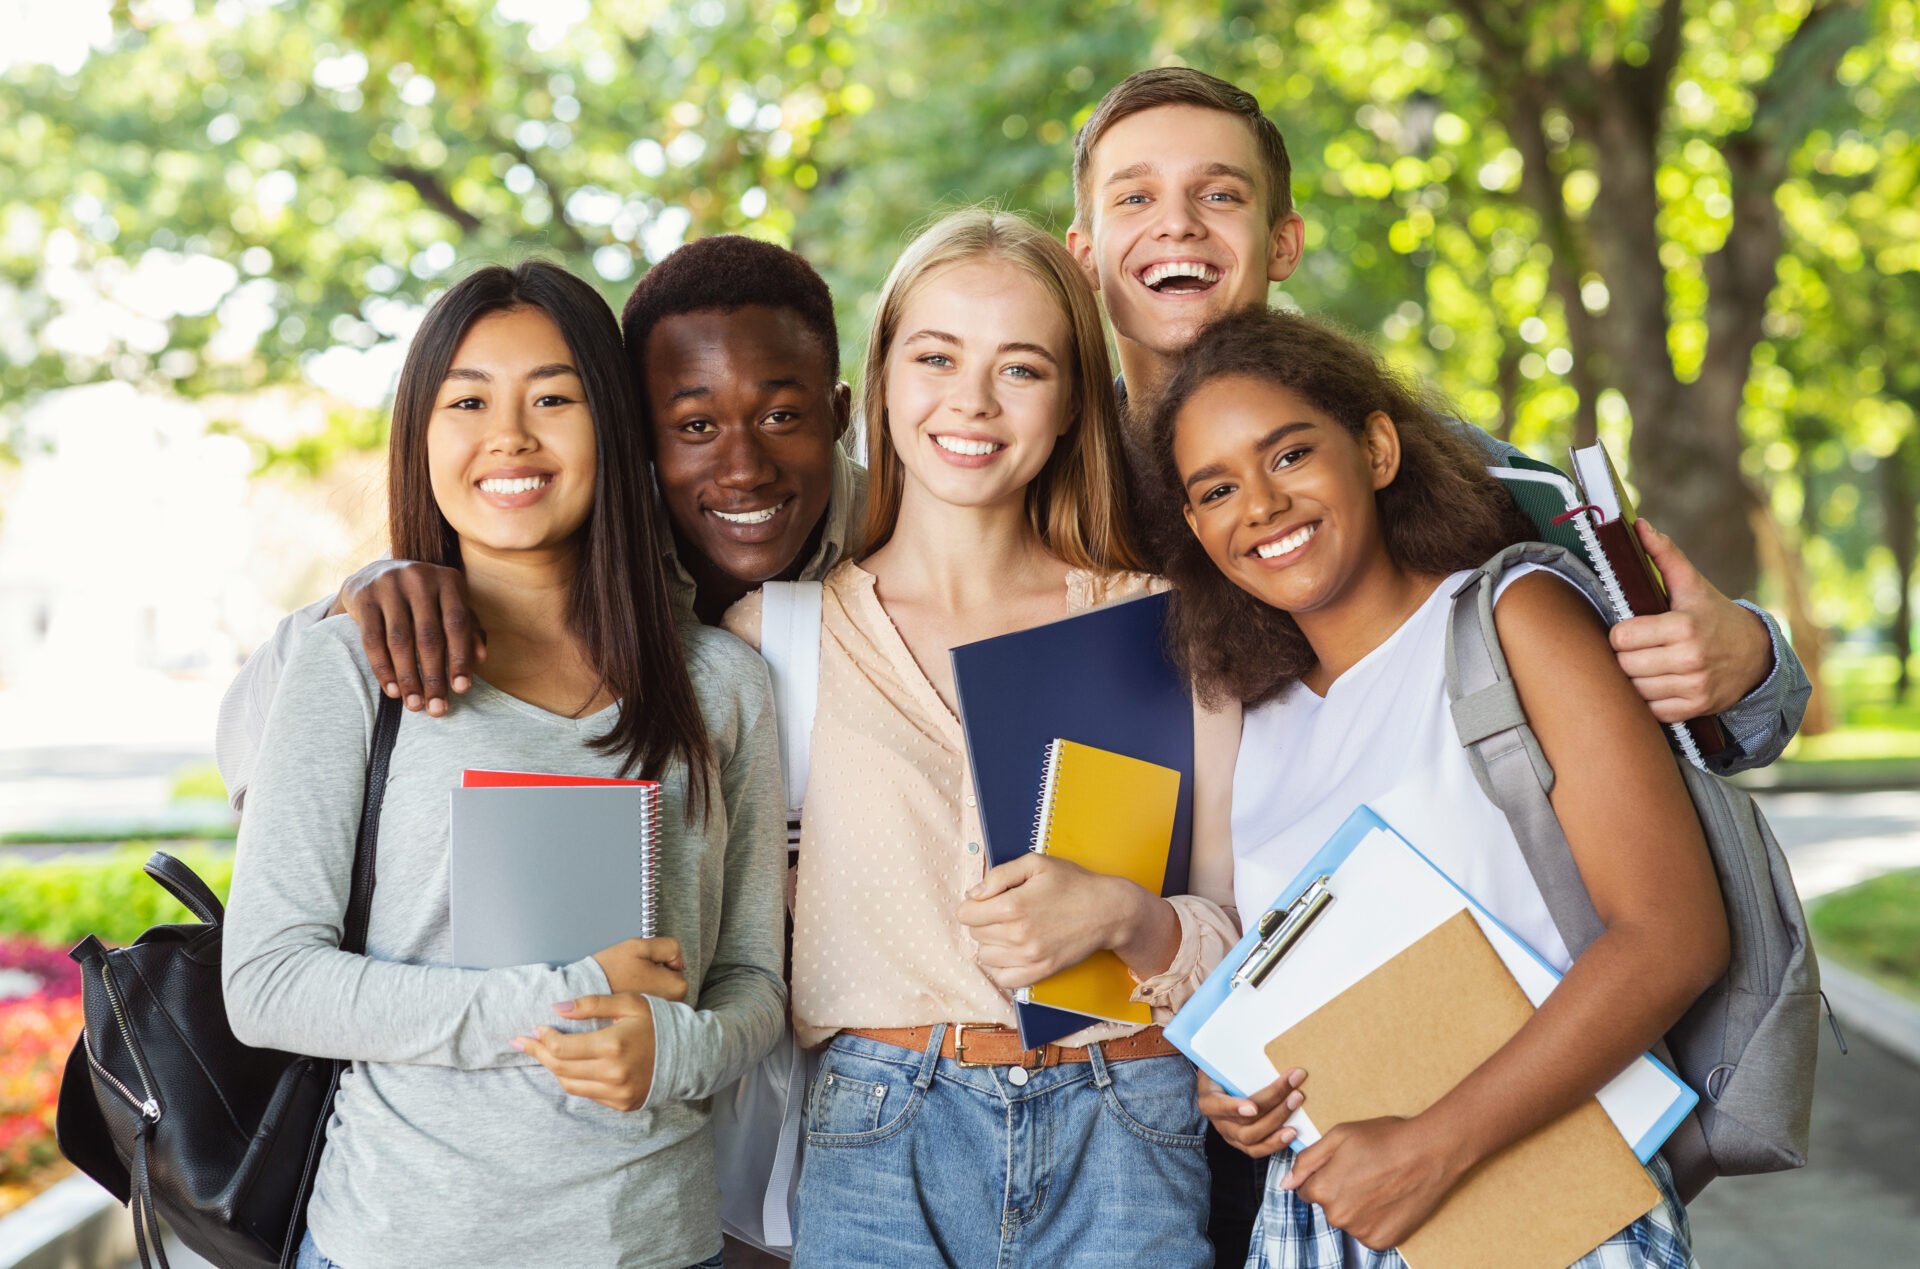 International Students: Why Study with a U.S.-Based Program?